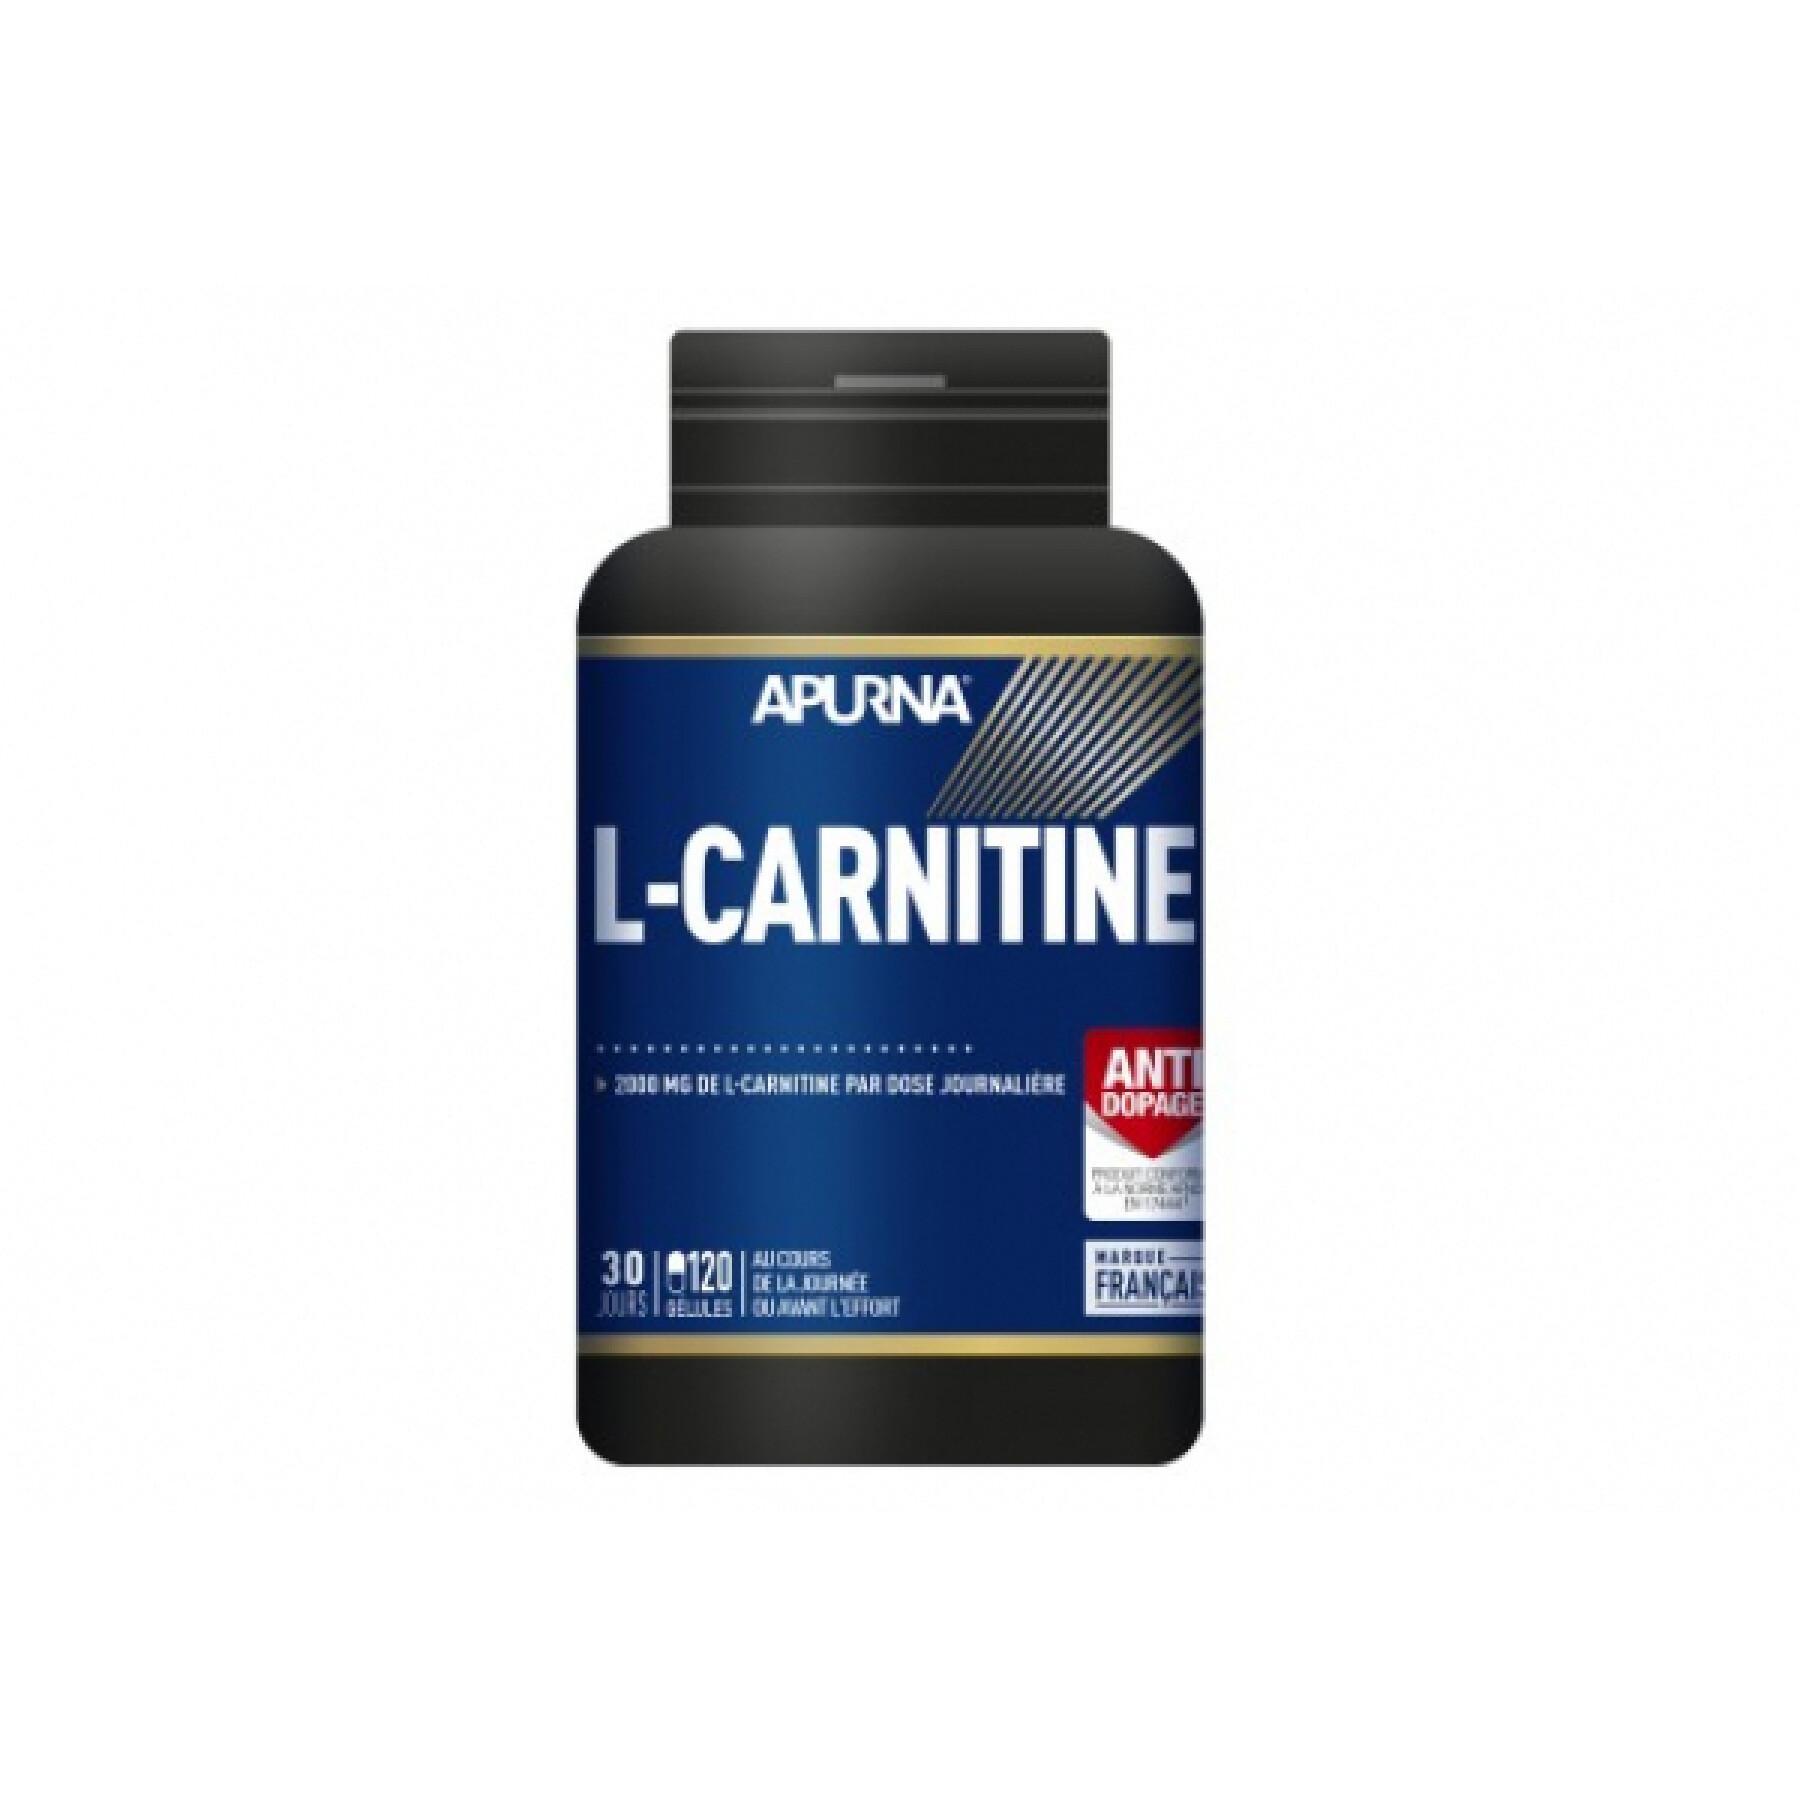 Tarro de 120 cápsulas Apurna L-Carnitine